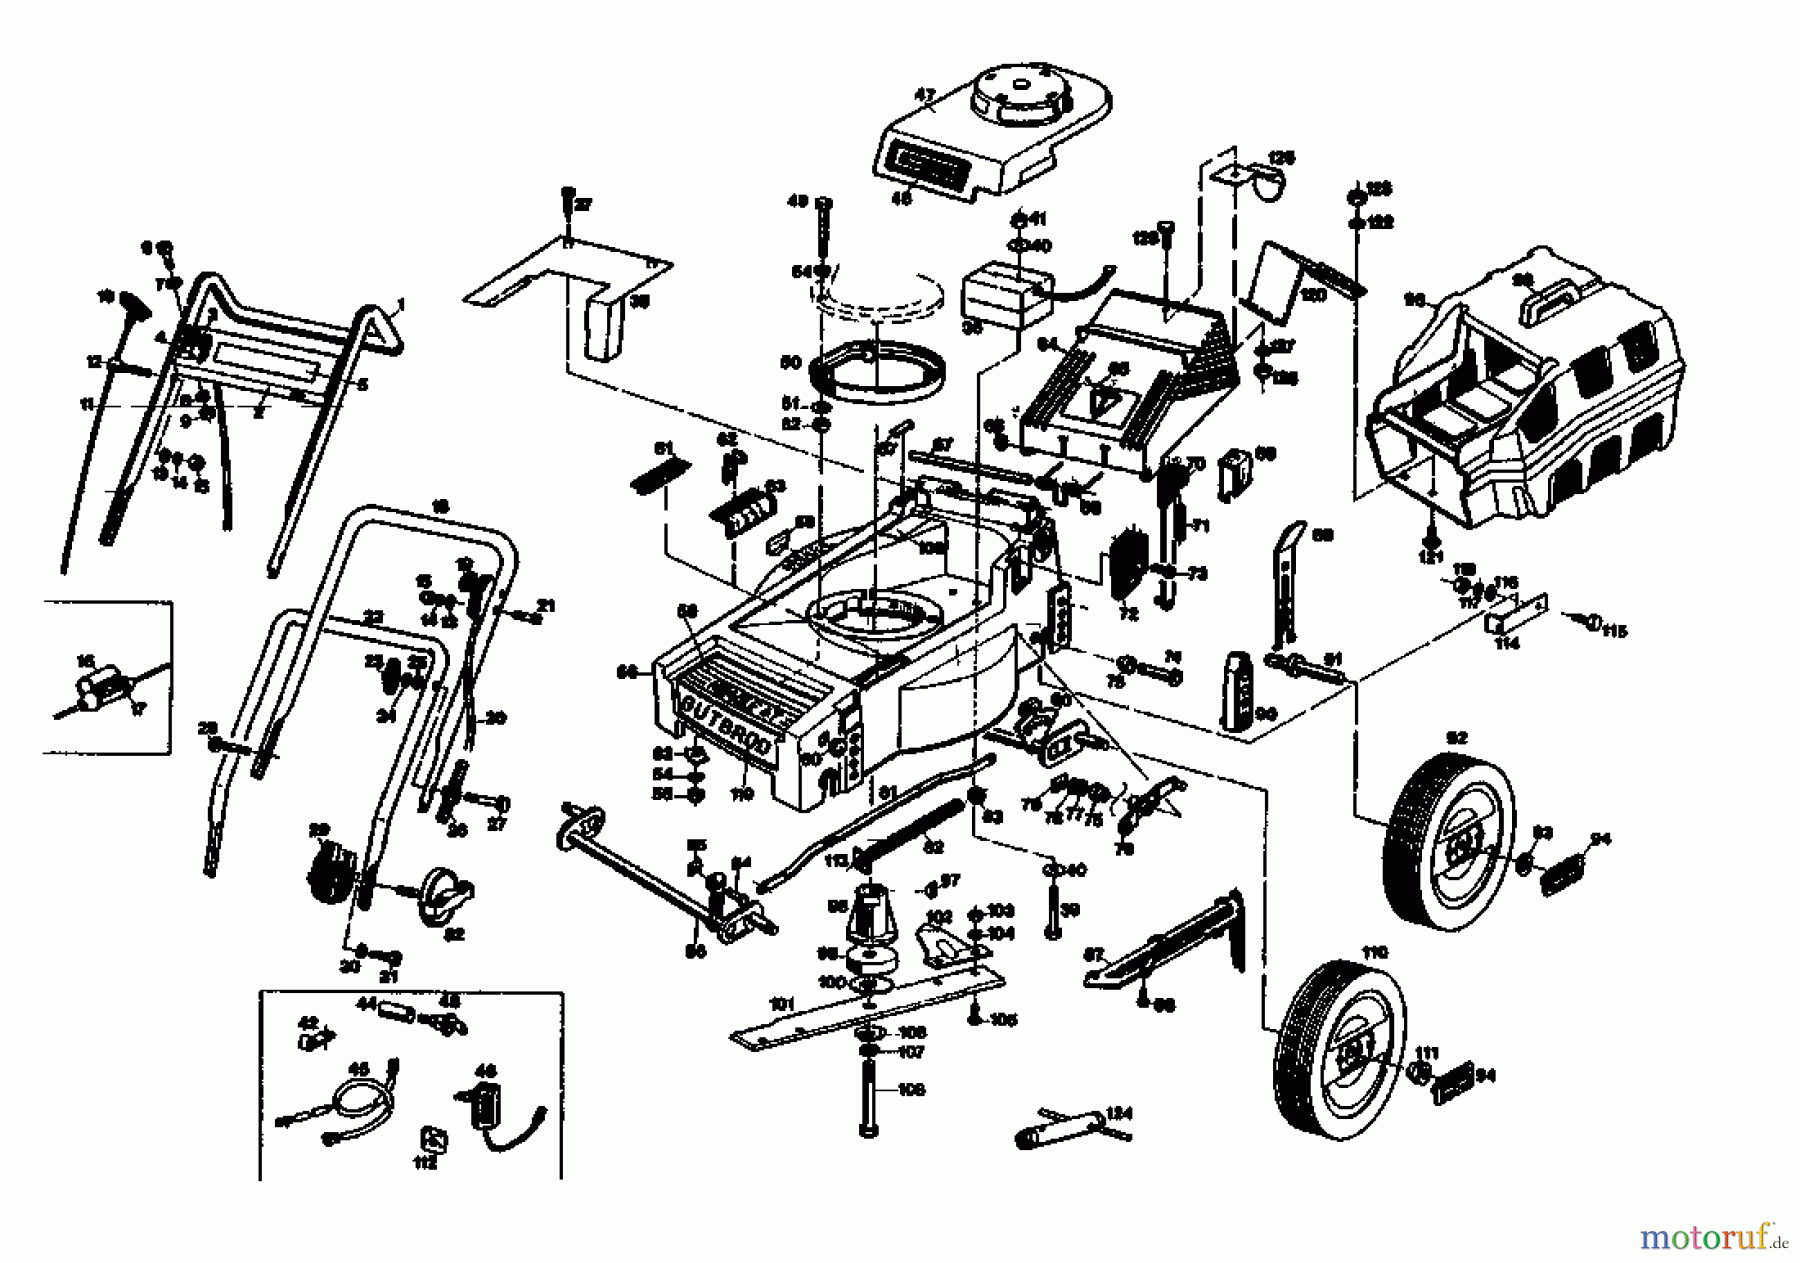  Gutbrod Petrol mower HB 40 LE 02896.06  (1987) Basic machine